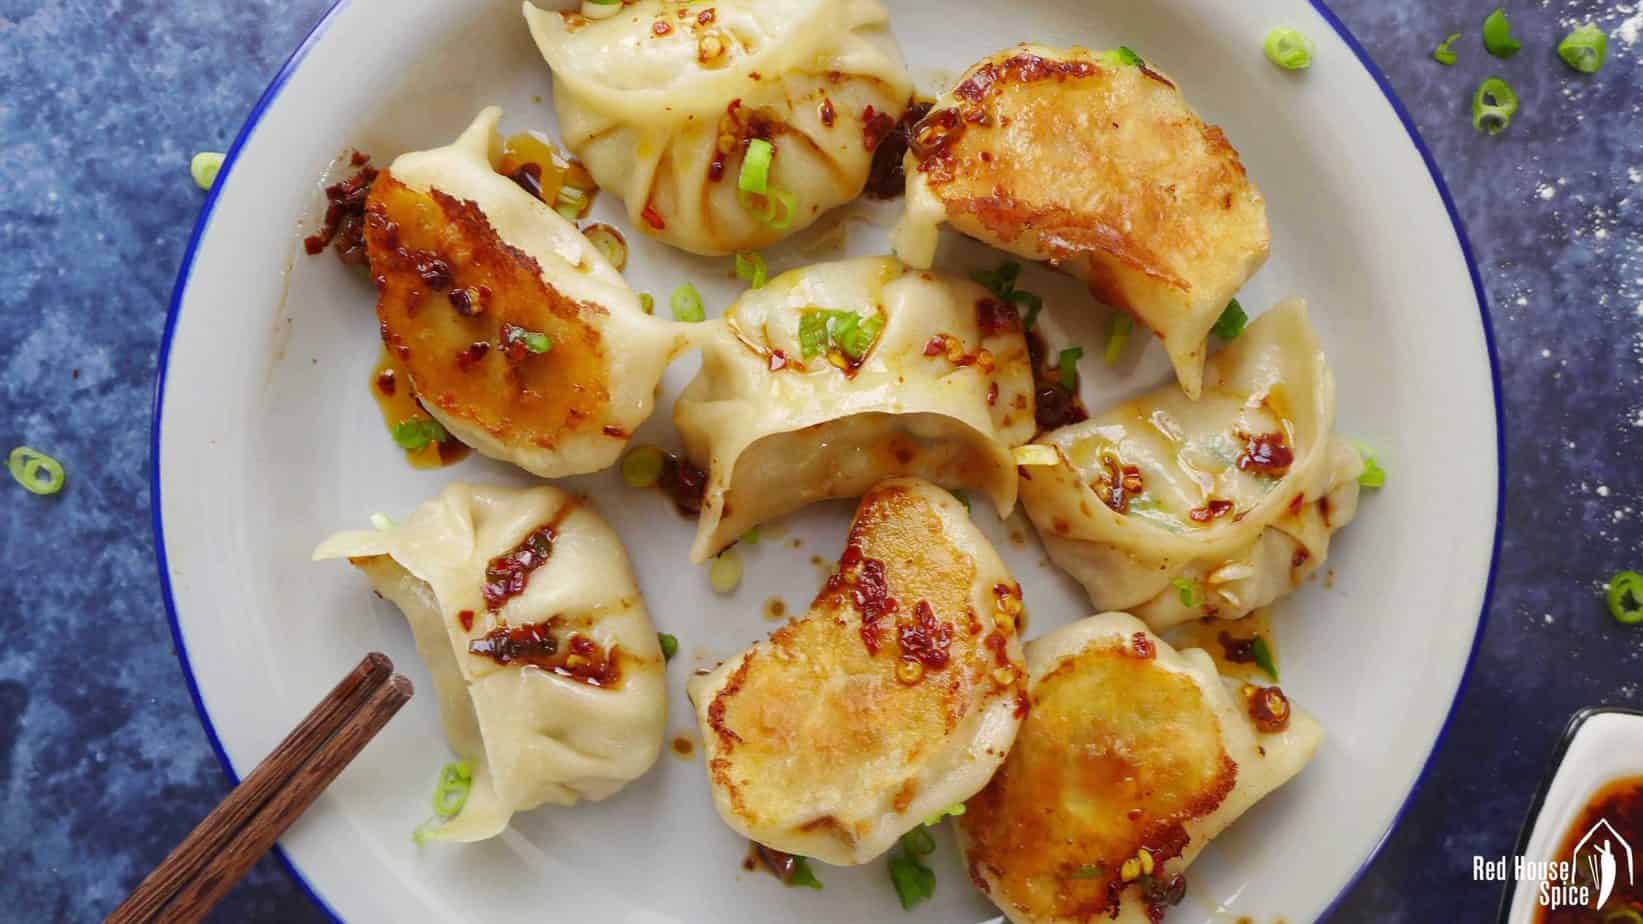 A plate of vegan dumplings